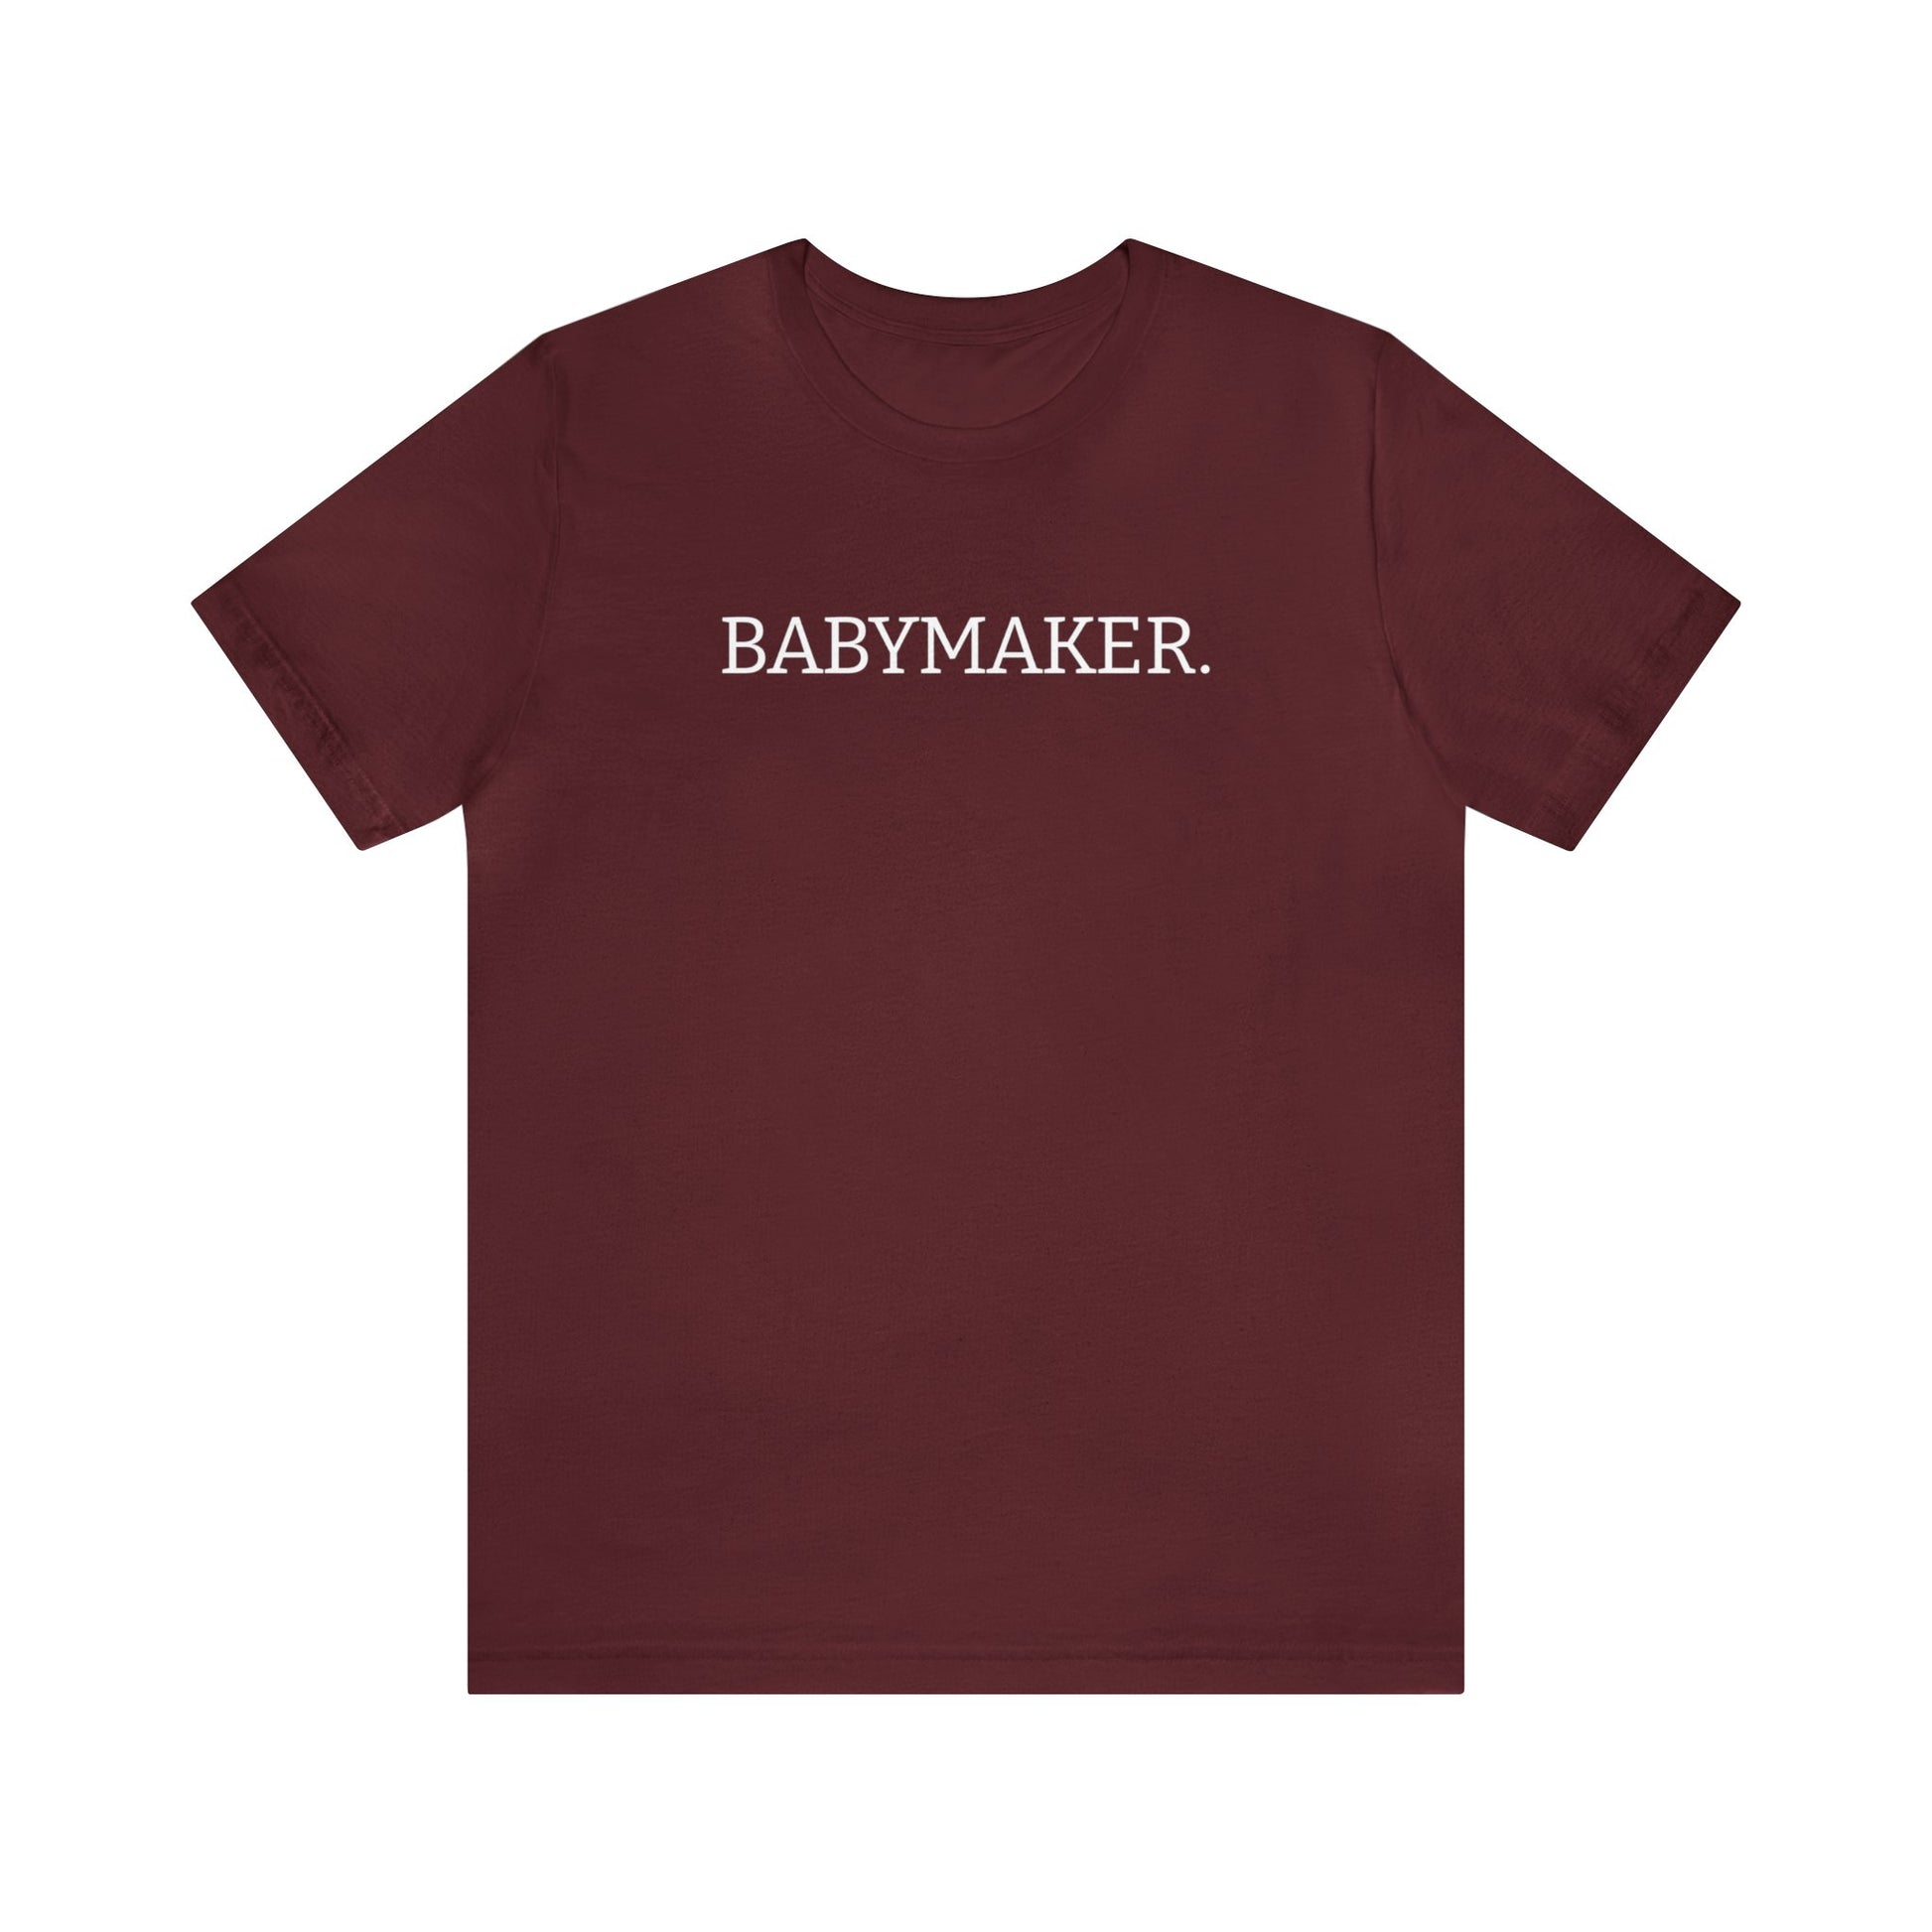 BABYMAKER Unisex T-shirt in Maroon